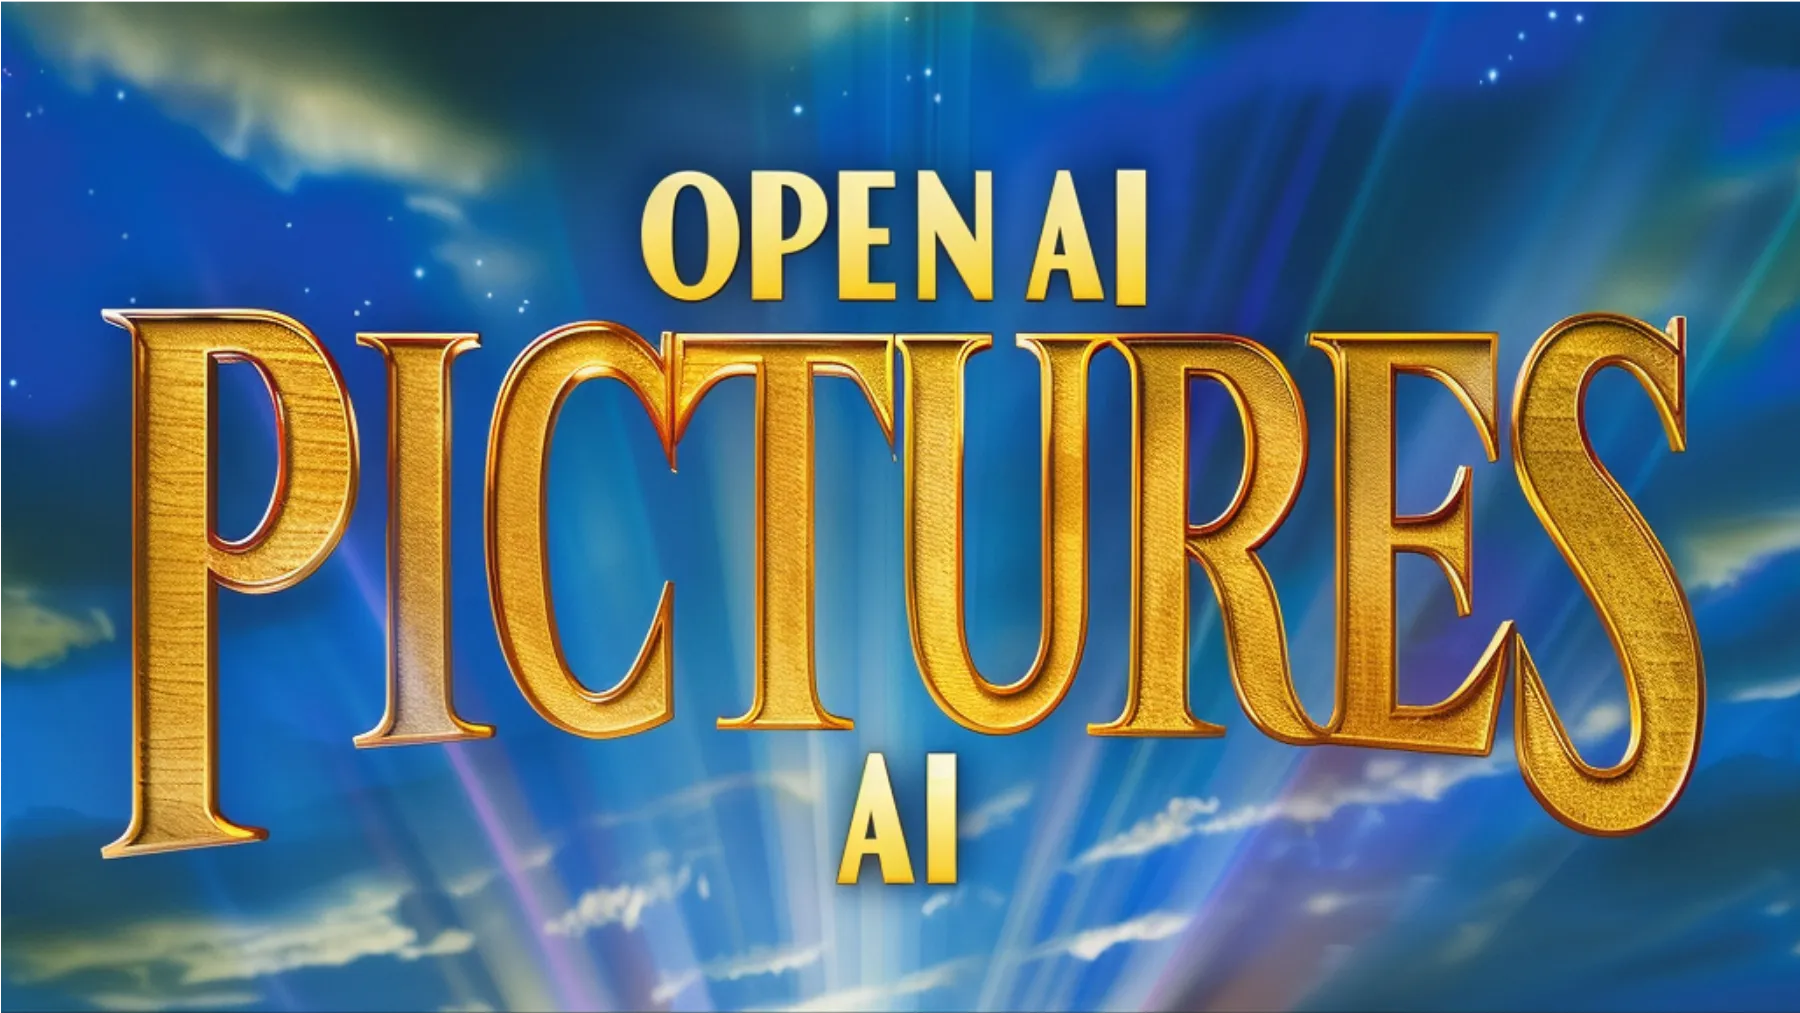 OpenAI Pictures movie logo